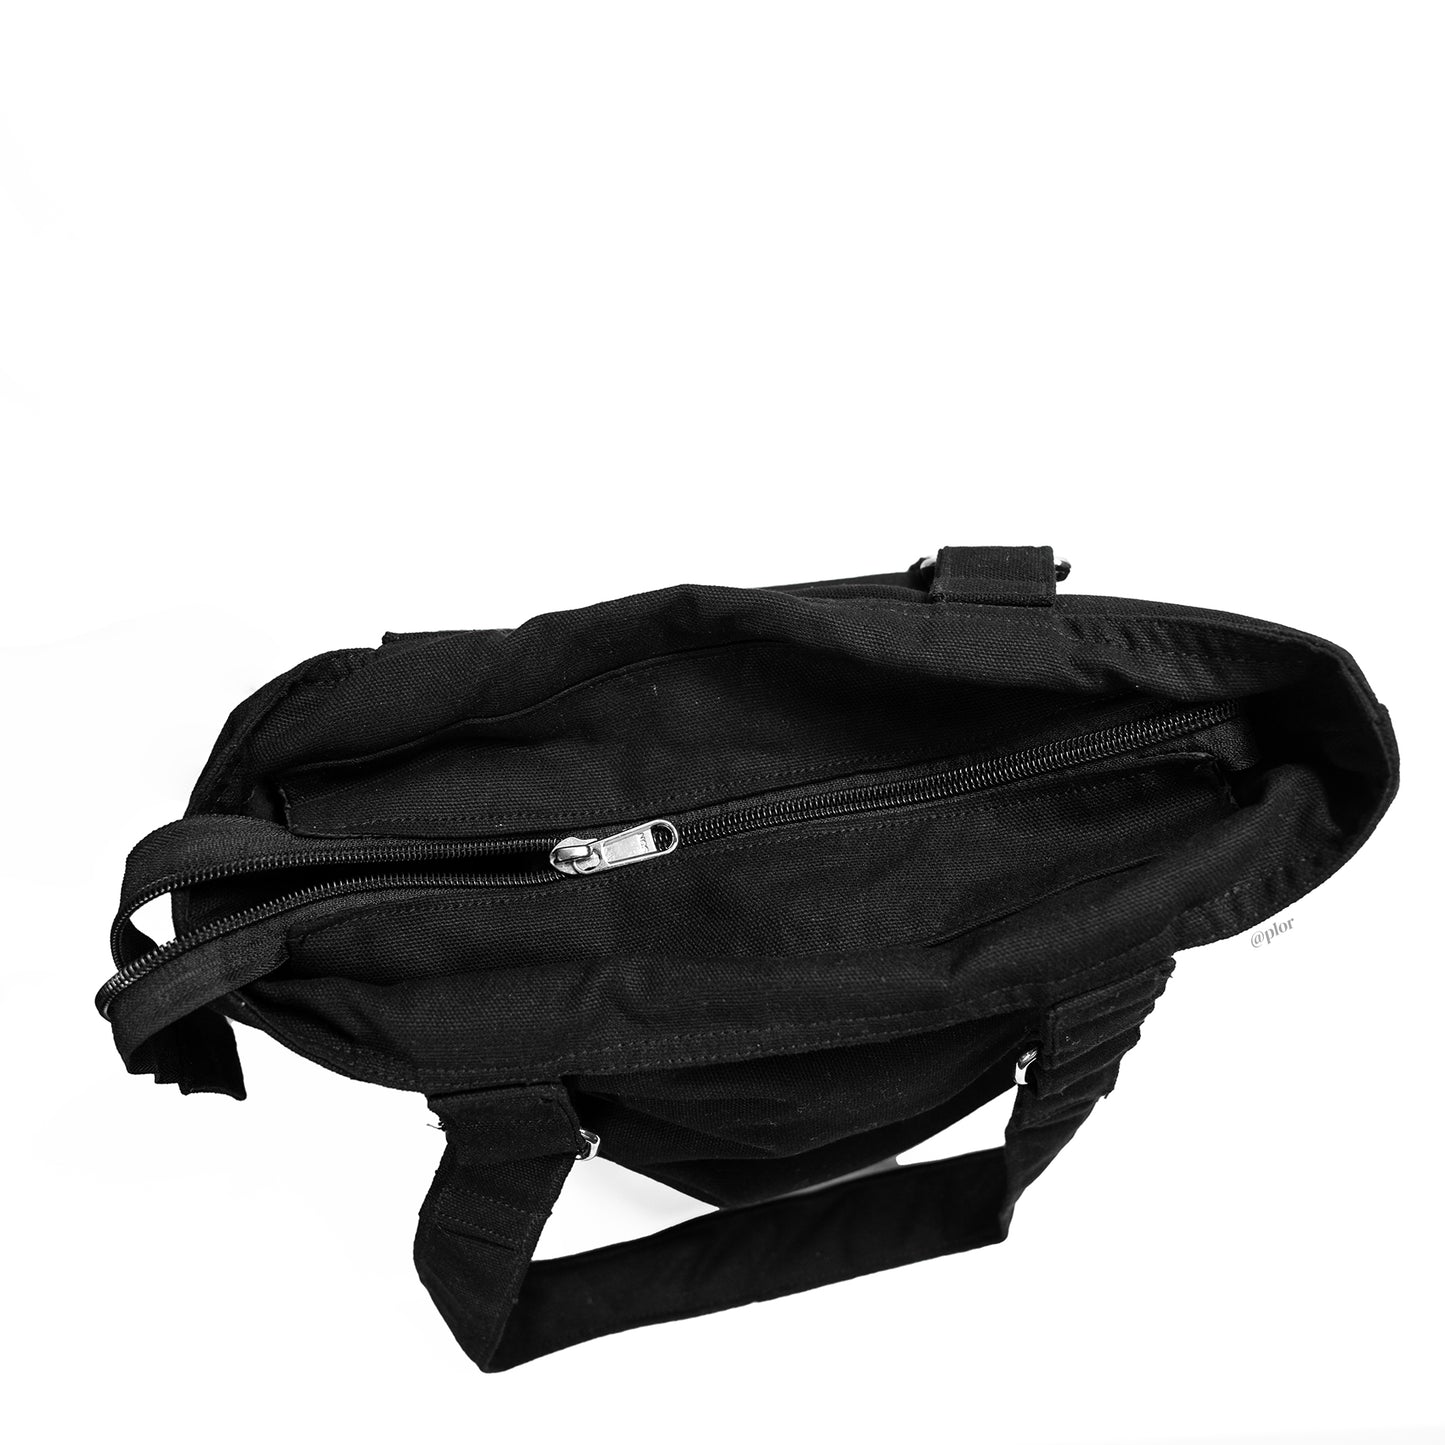 Not So Basic Black Tote Bag